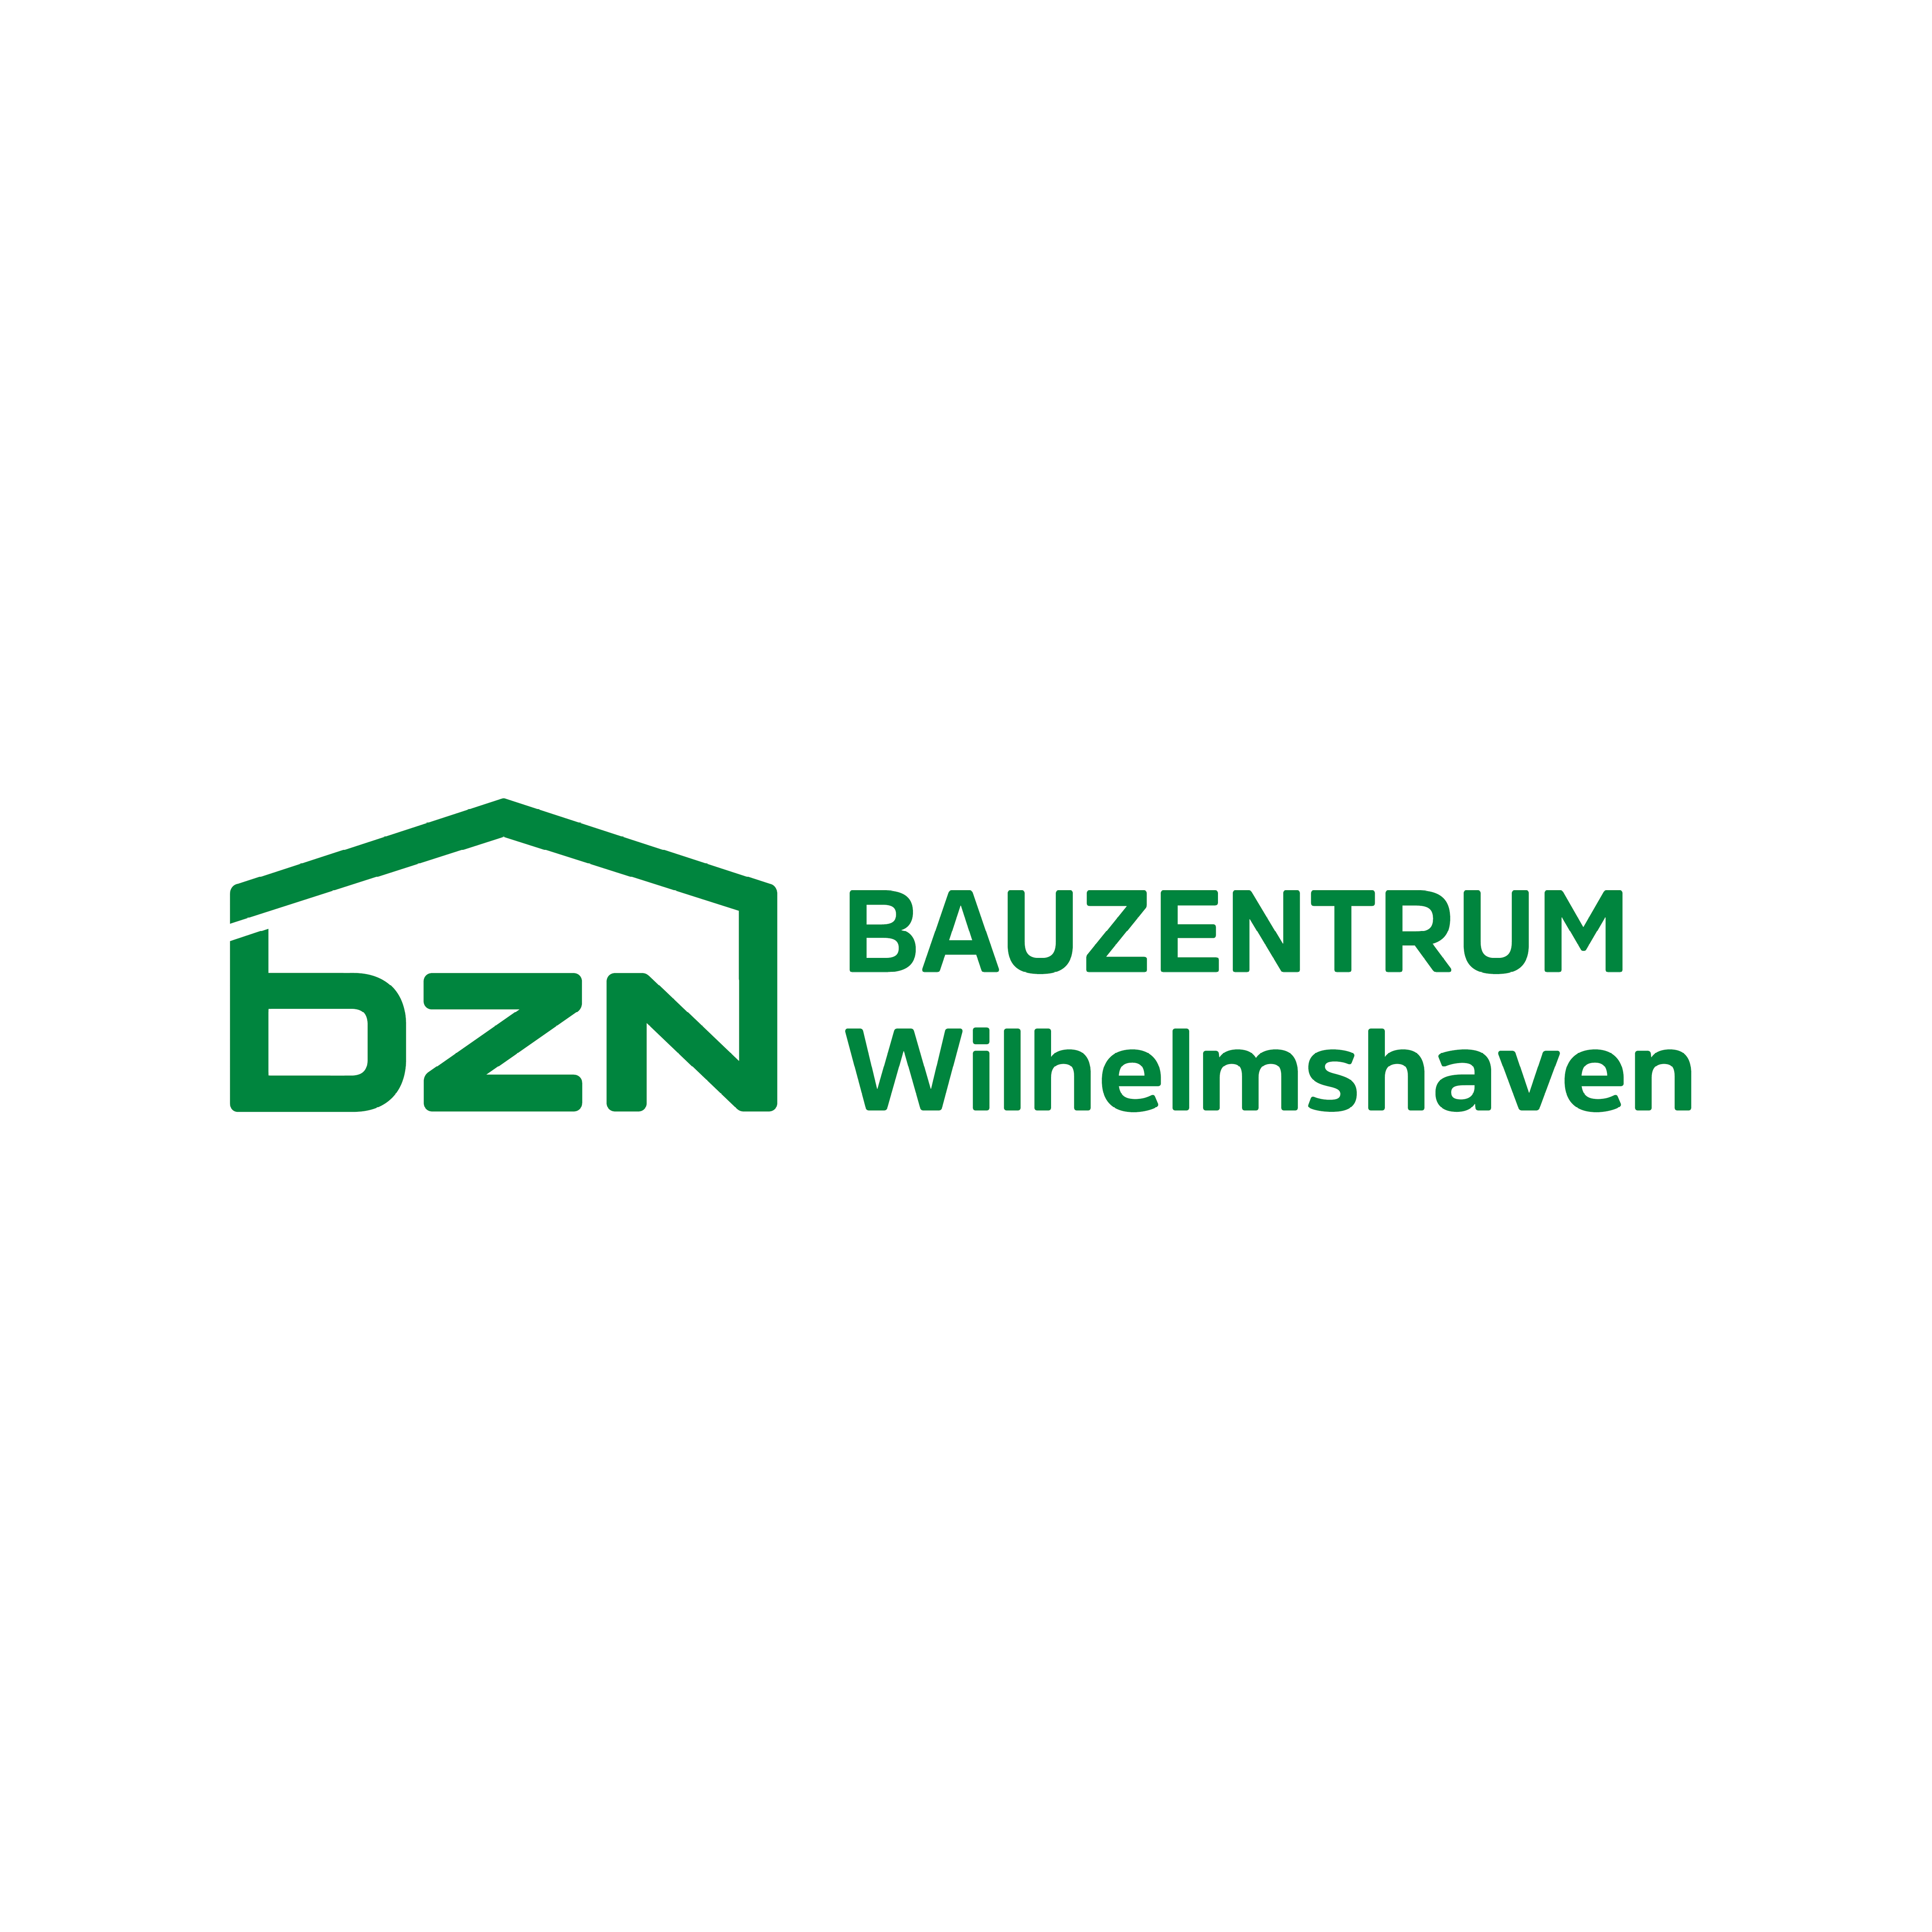 BZN Bauzentrum Wilhelmshaven GmbH & Co. KG Logo